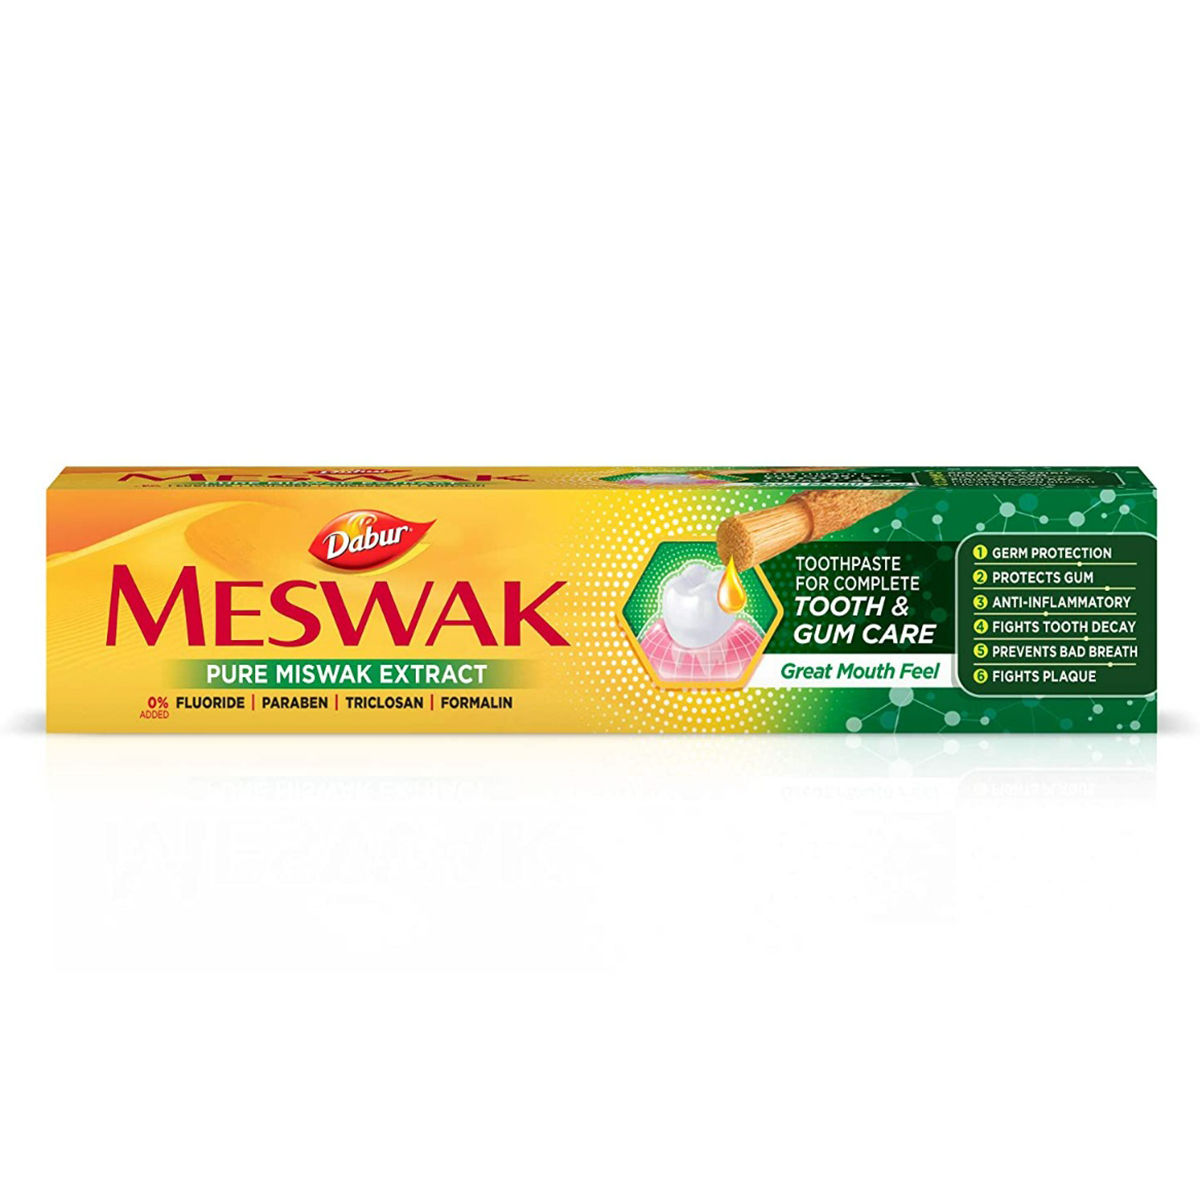 Buy Dabur Meswak Complete Tooth & Gum Care Toothpaste, 45 gm Online